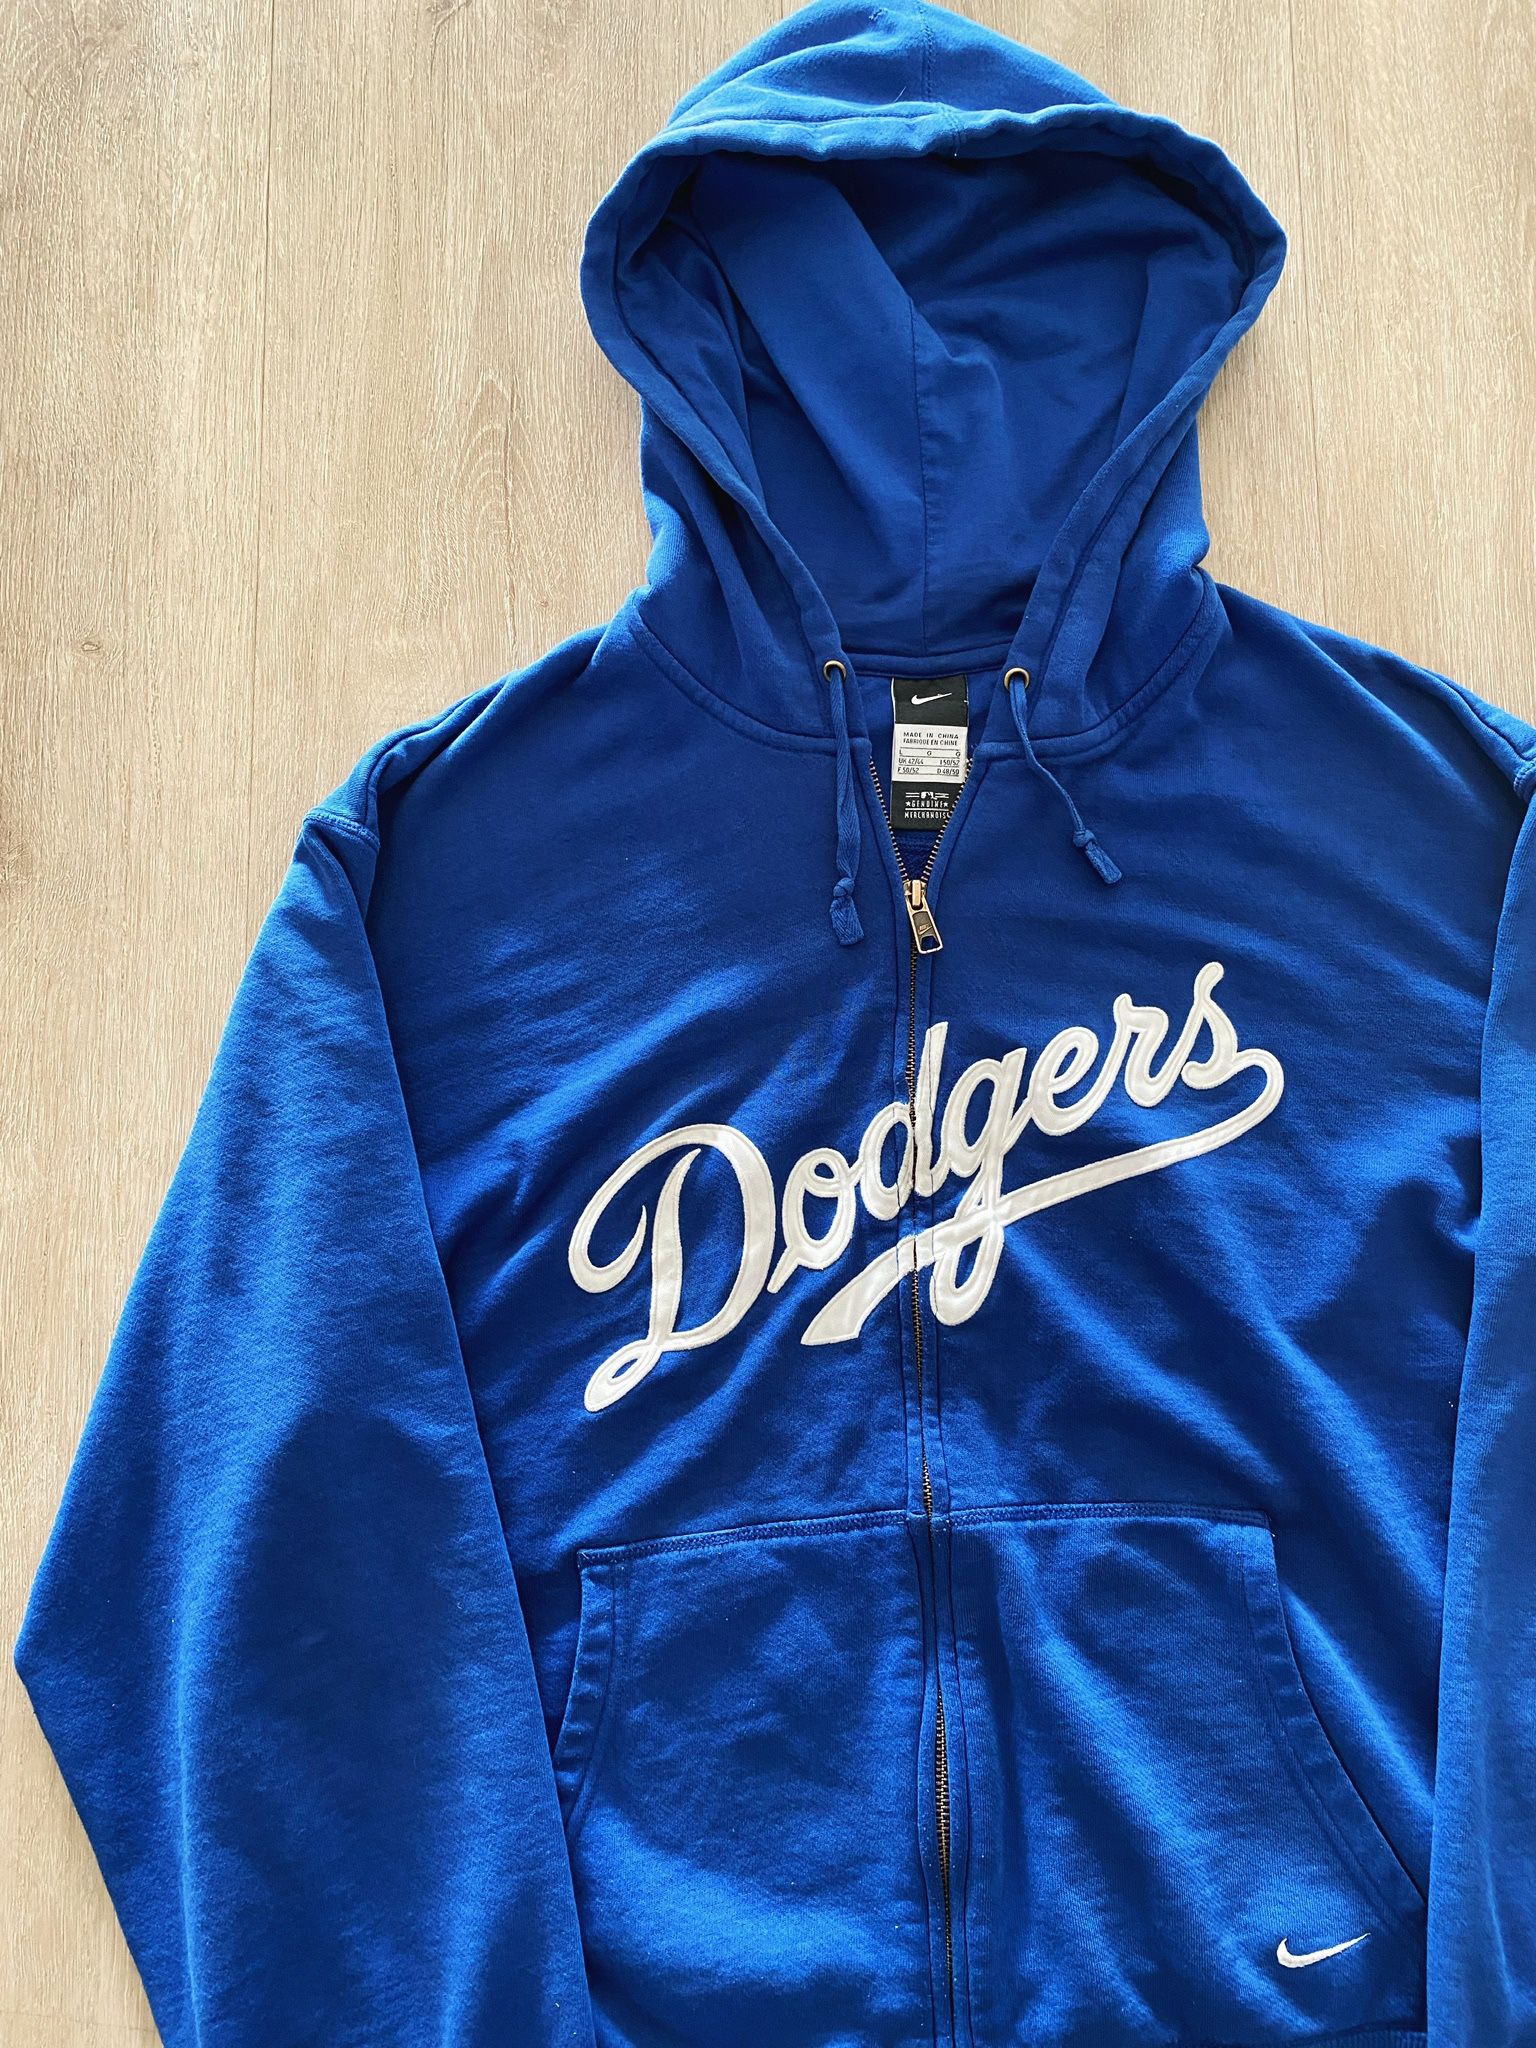 LA Dodgers Nike Dri-Fit Hoodie XL for Sale in Commerce, CA - OfferUp